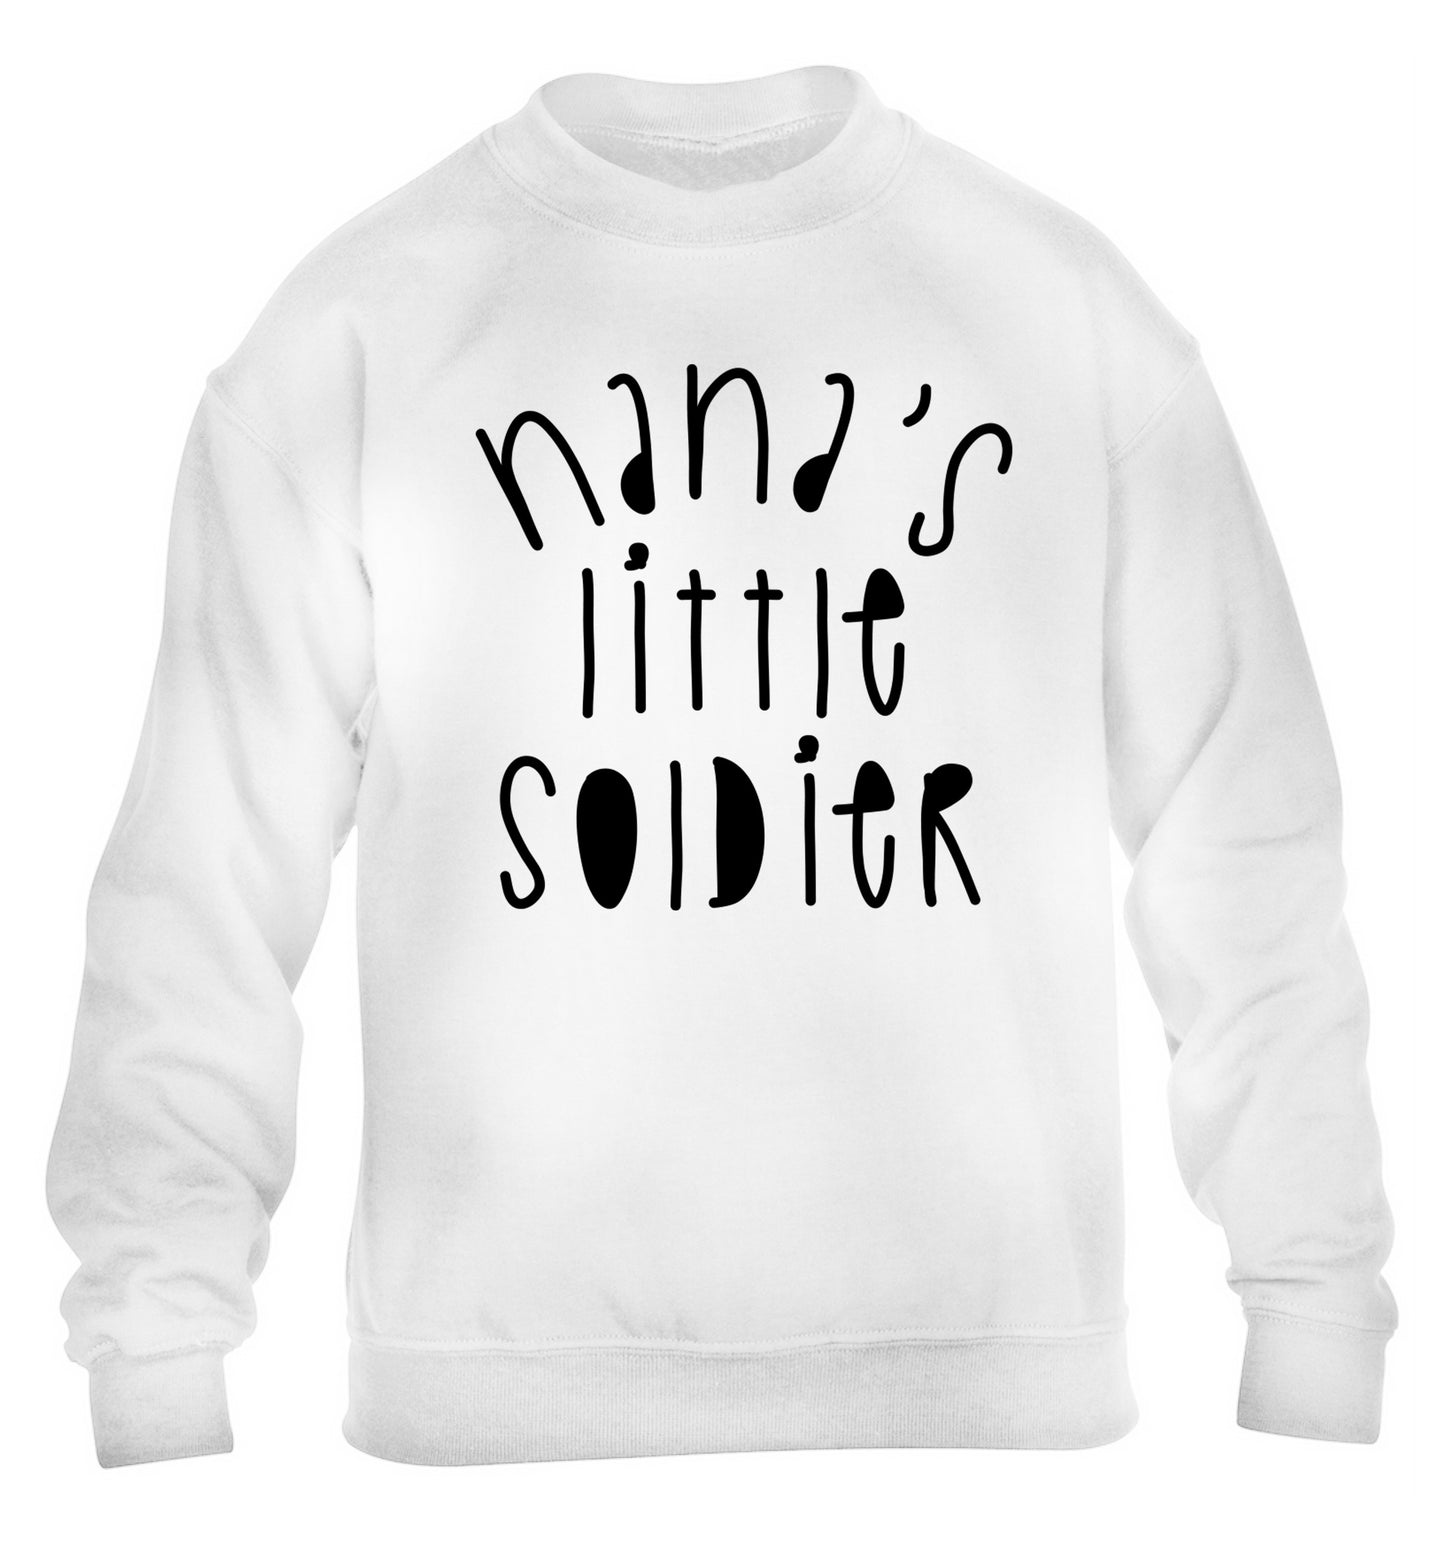 Nana's little soldier children's white sweater 12-14 Years